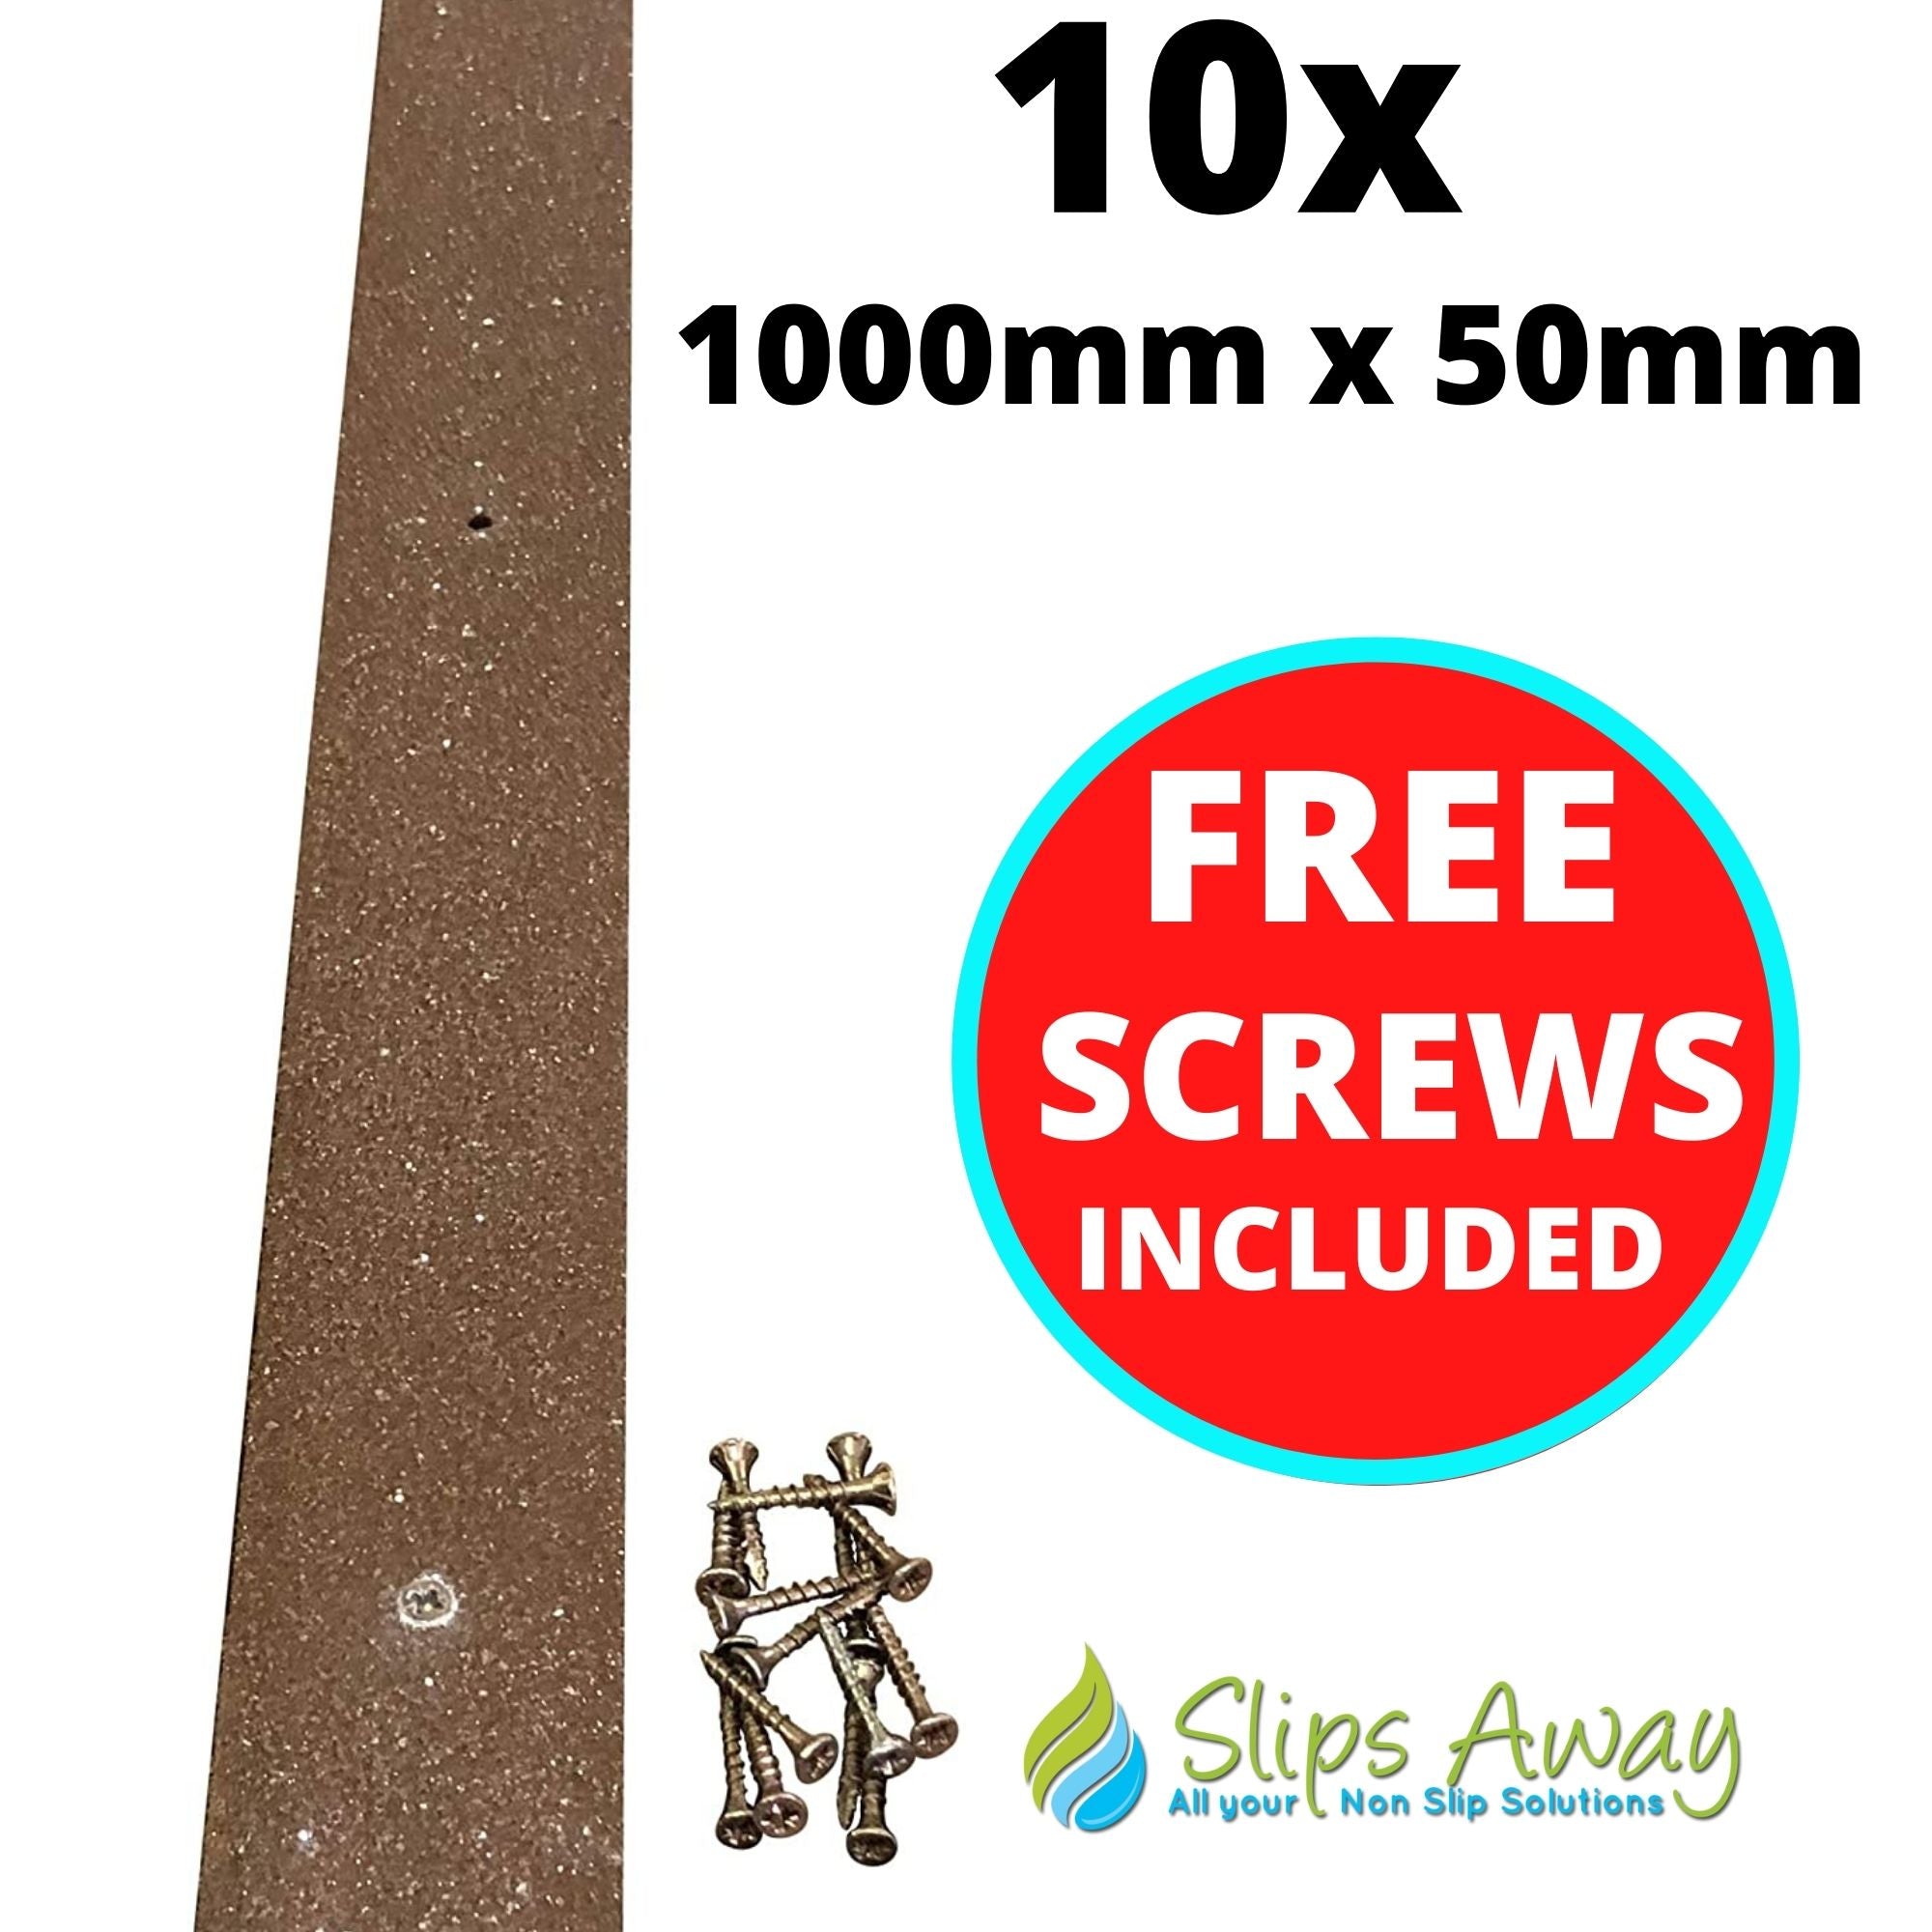 Brown Non Slip Decking Strips - Slips Away decking strip brown 1000mm x 50mm 10x pack -# - 5061000044253 decking strip brown 1000mm x 50mm 10x pack - 1000mm x 50mm